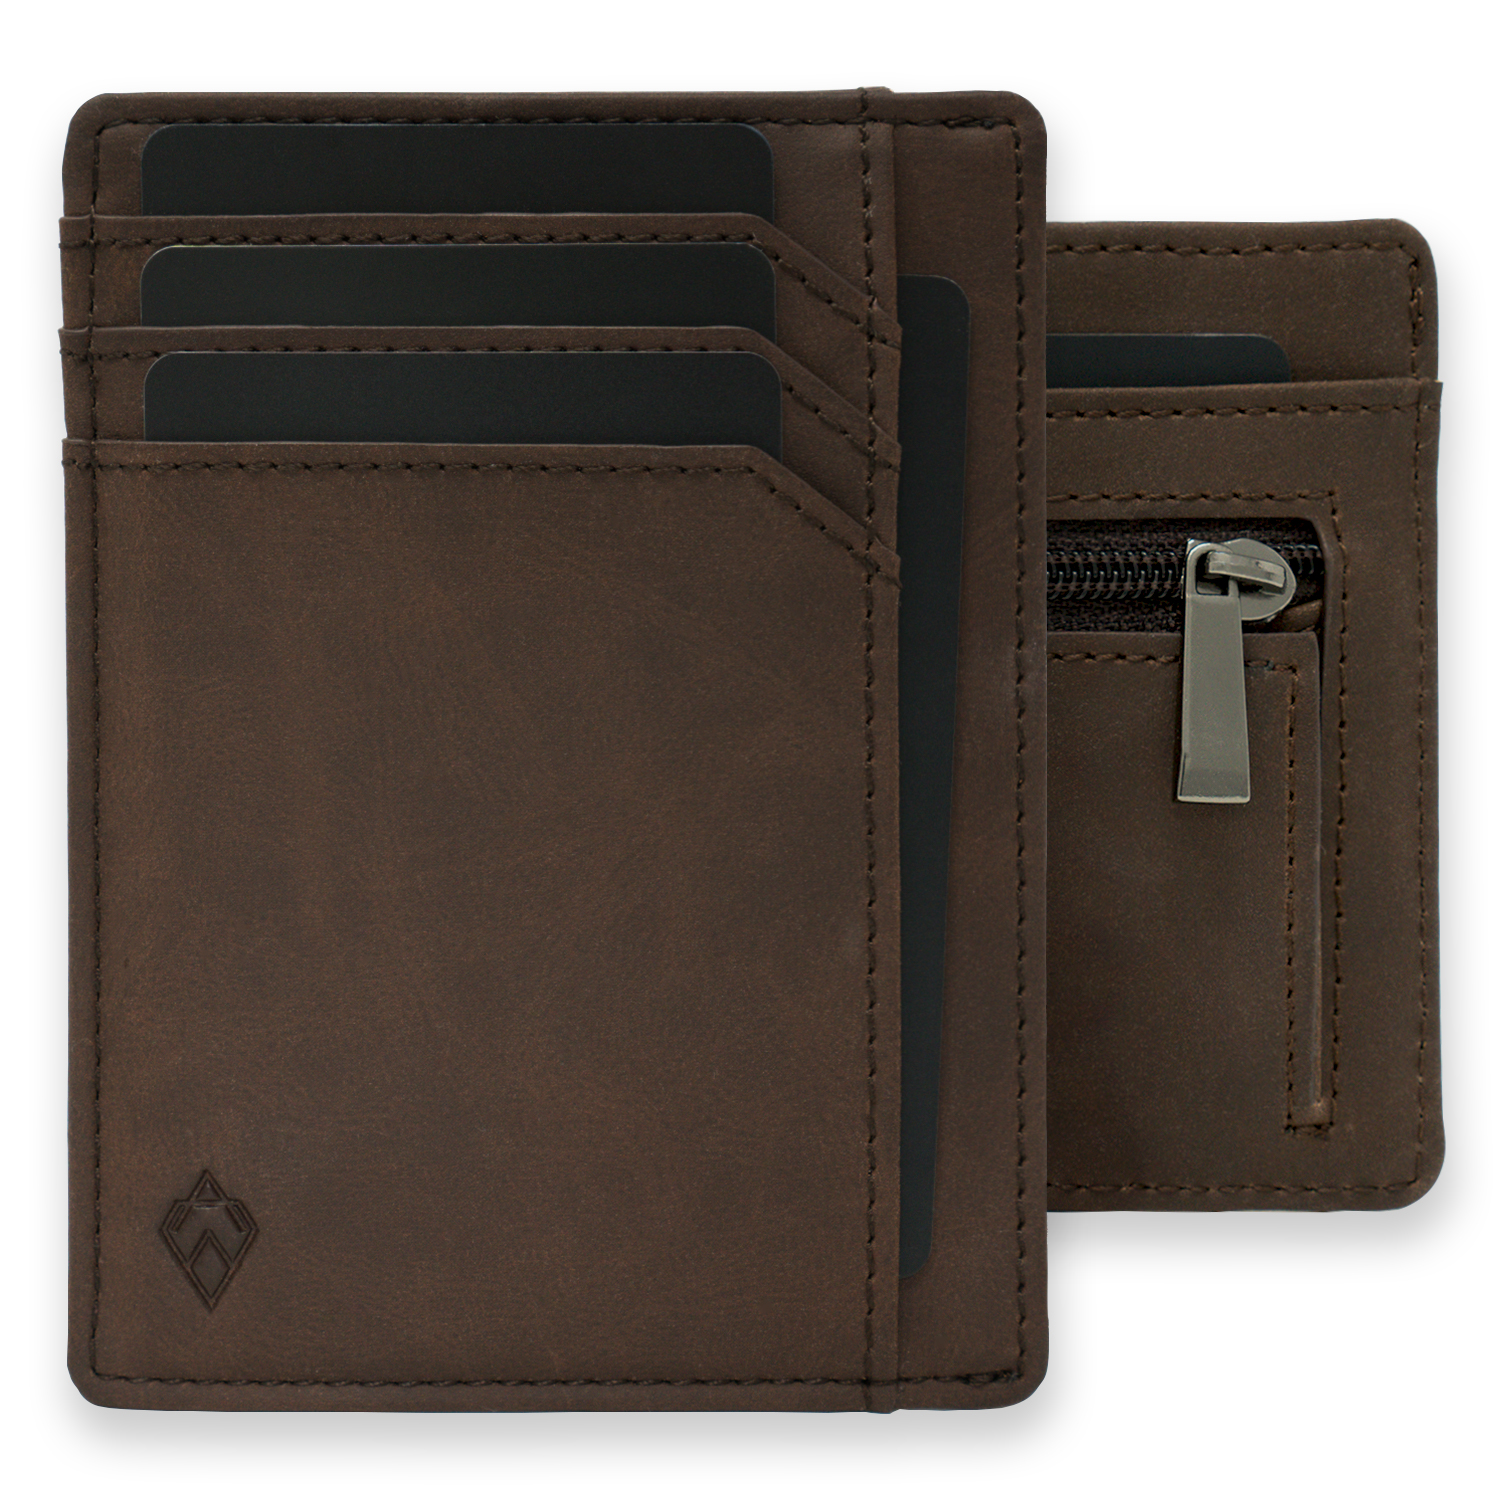 Brown RFID blocking credit card holder wallet with Zip Wallet